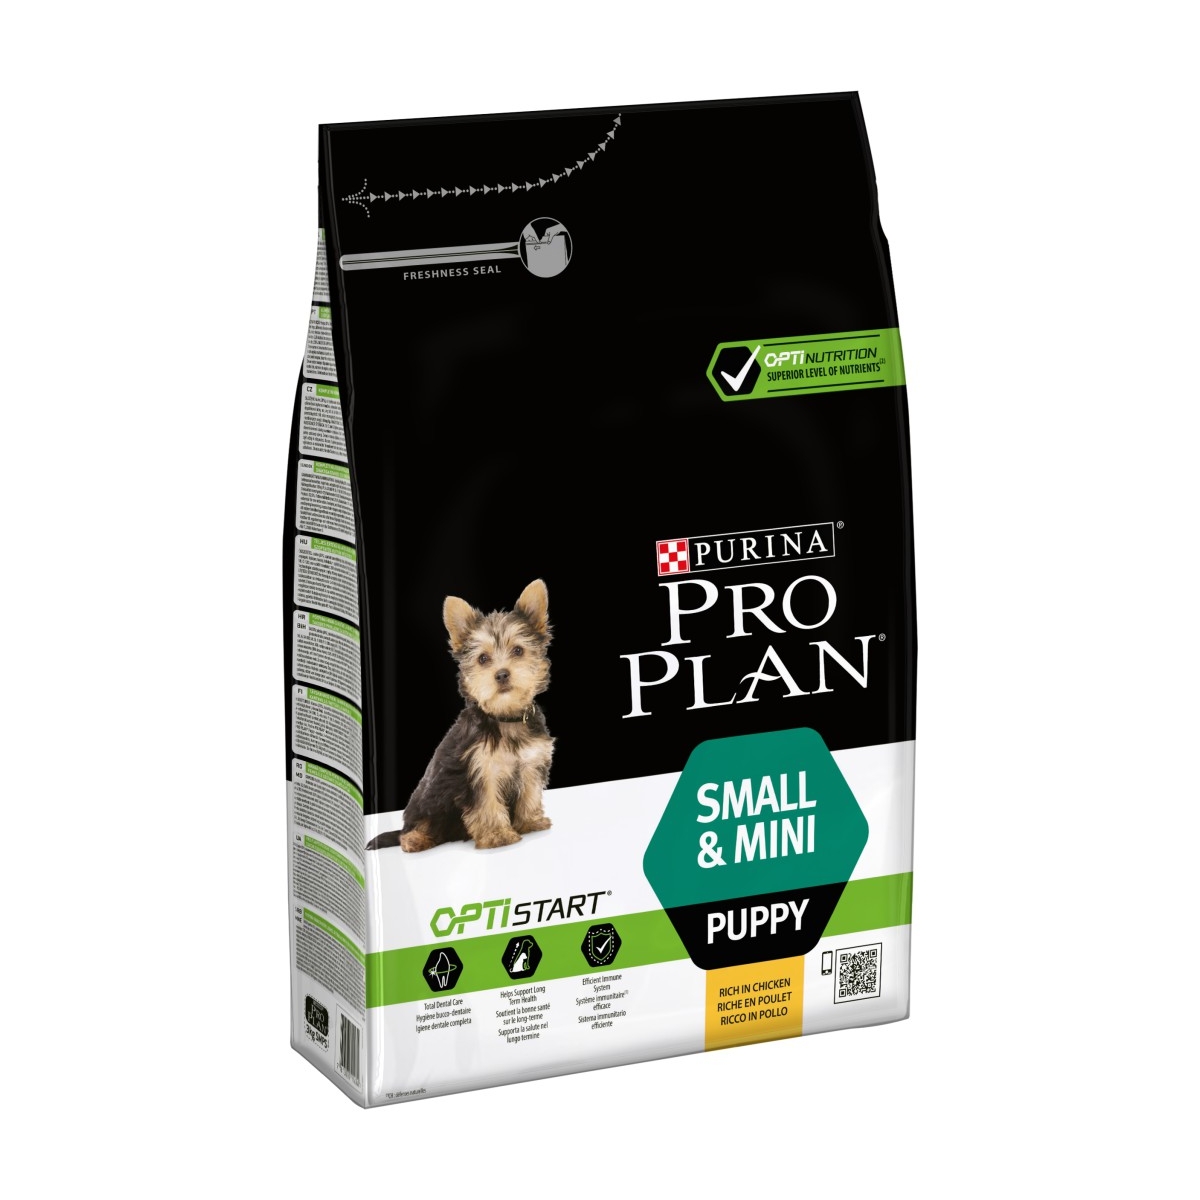 Purina PRO PLAN Small&Mini Puppy with OPTISTART®, 3 kg